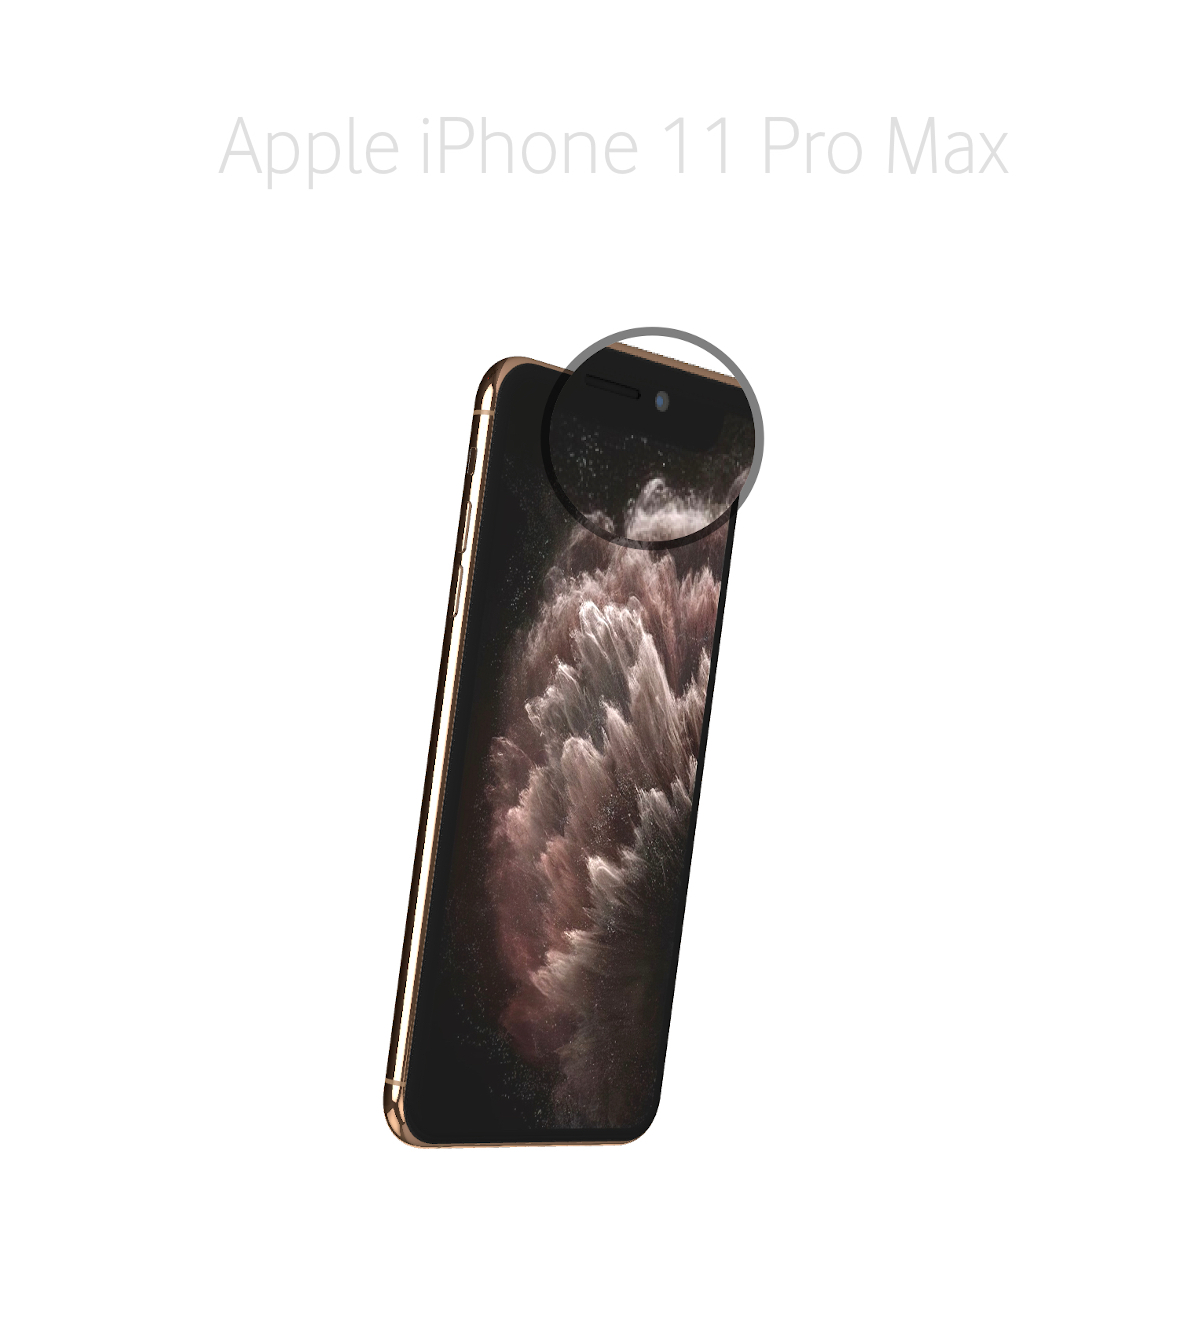 Laga samtalshögtalare iPhone 11 Pro Max